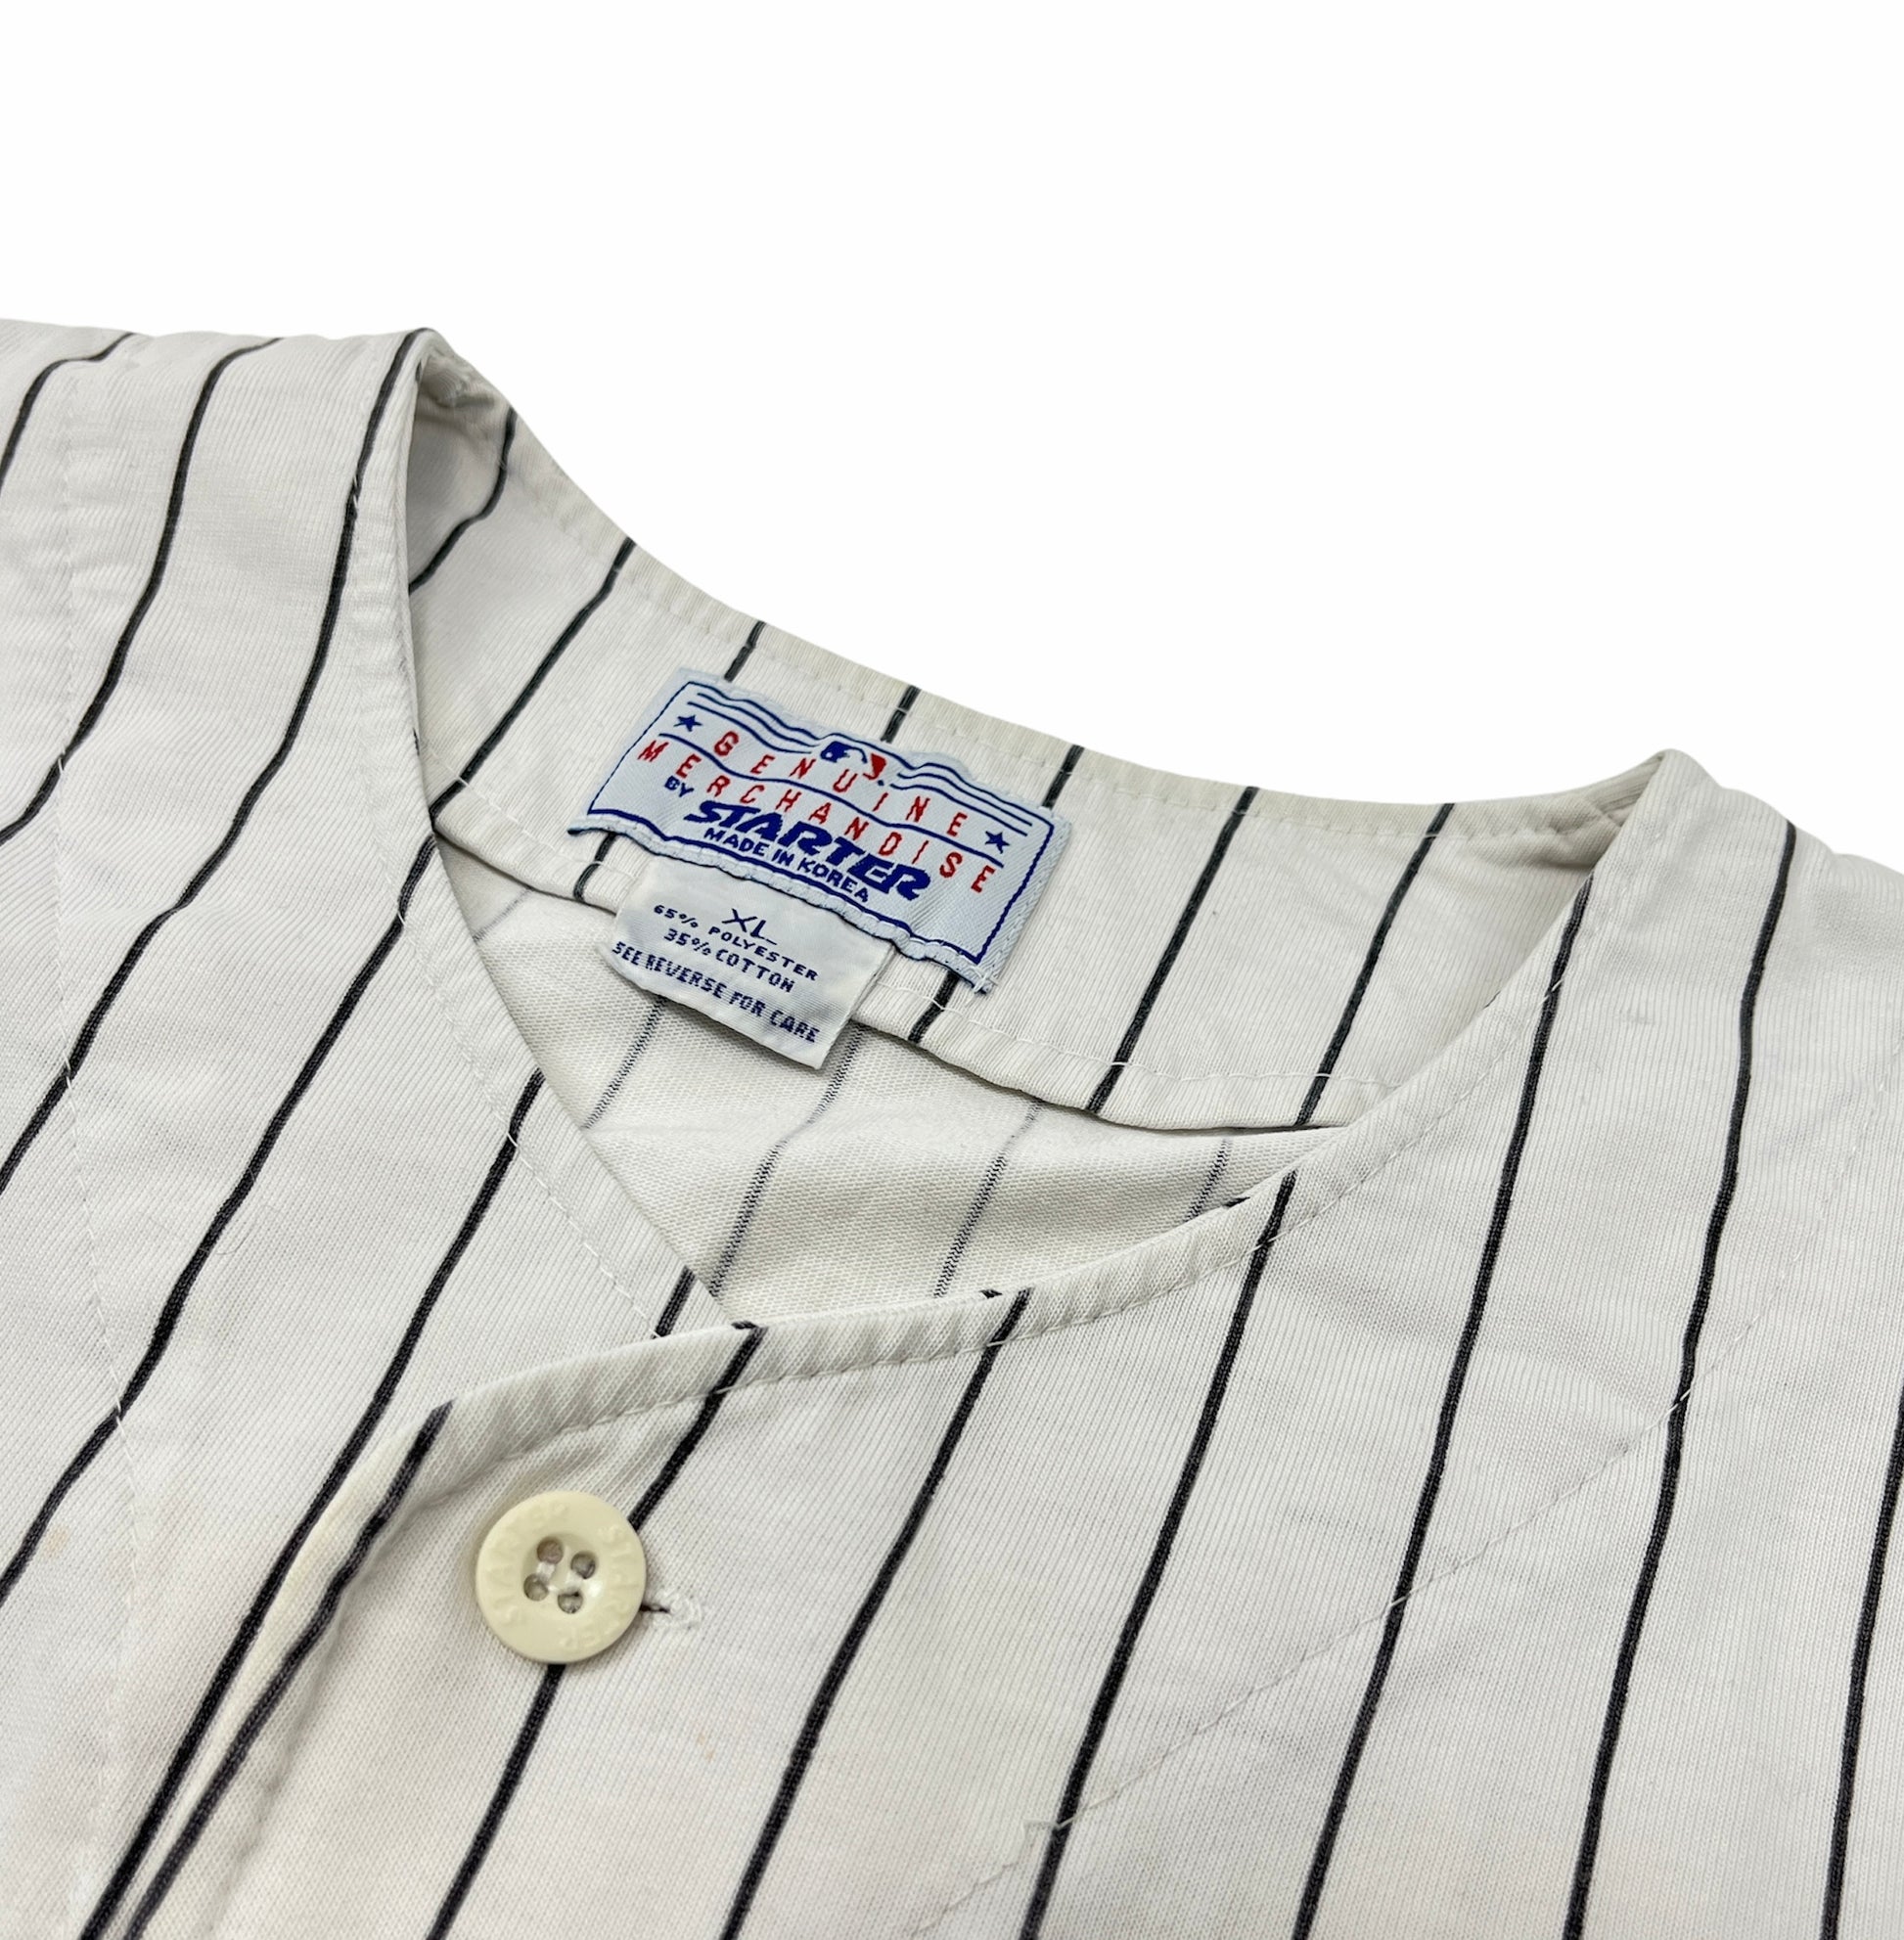 Chicago White Sox Jersey Vintage 90s Starter Original